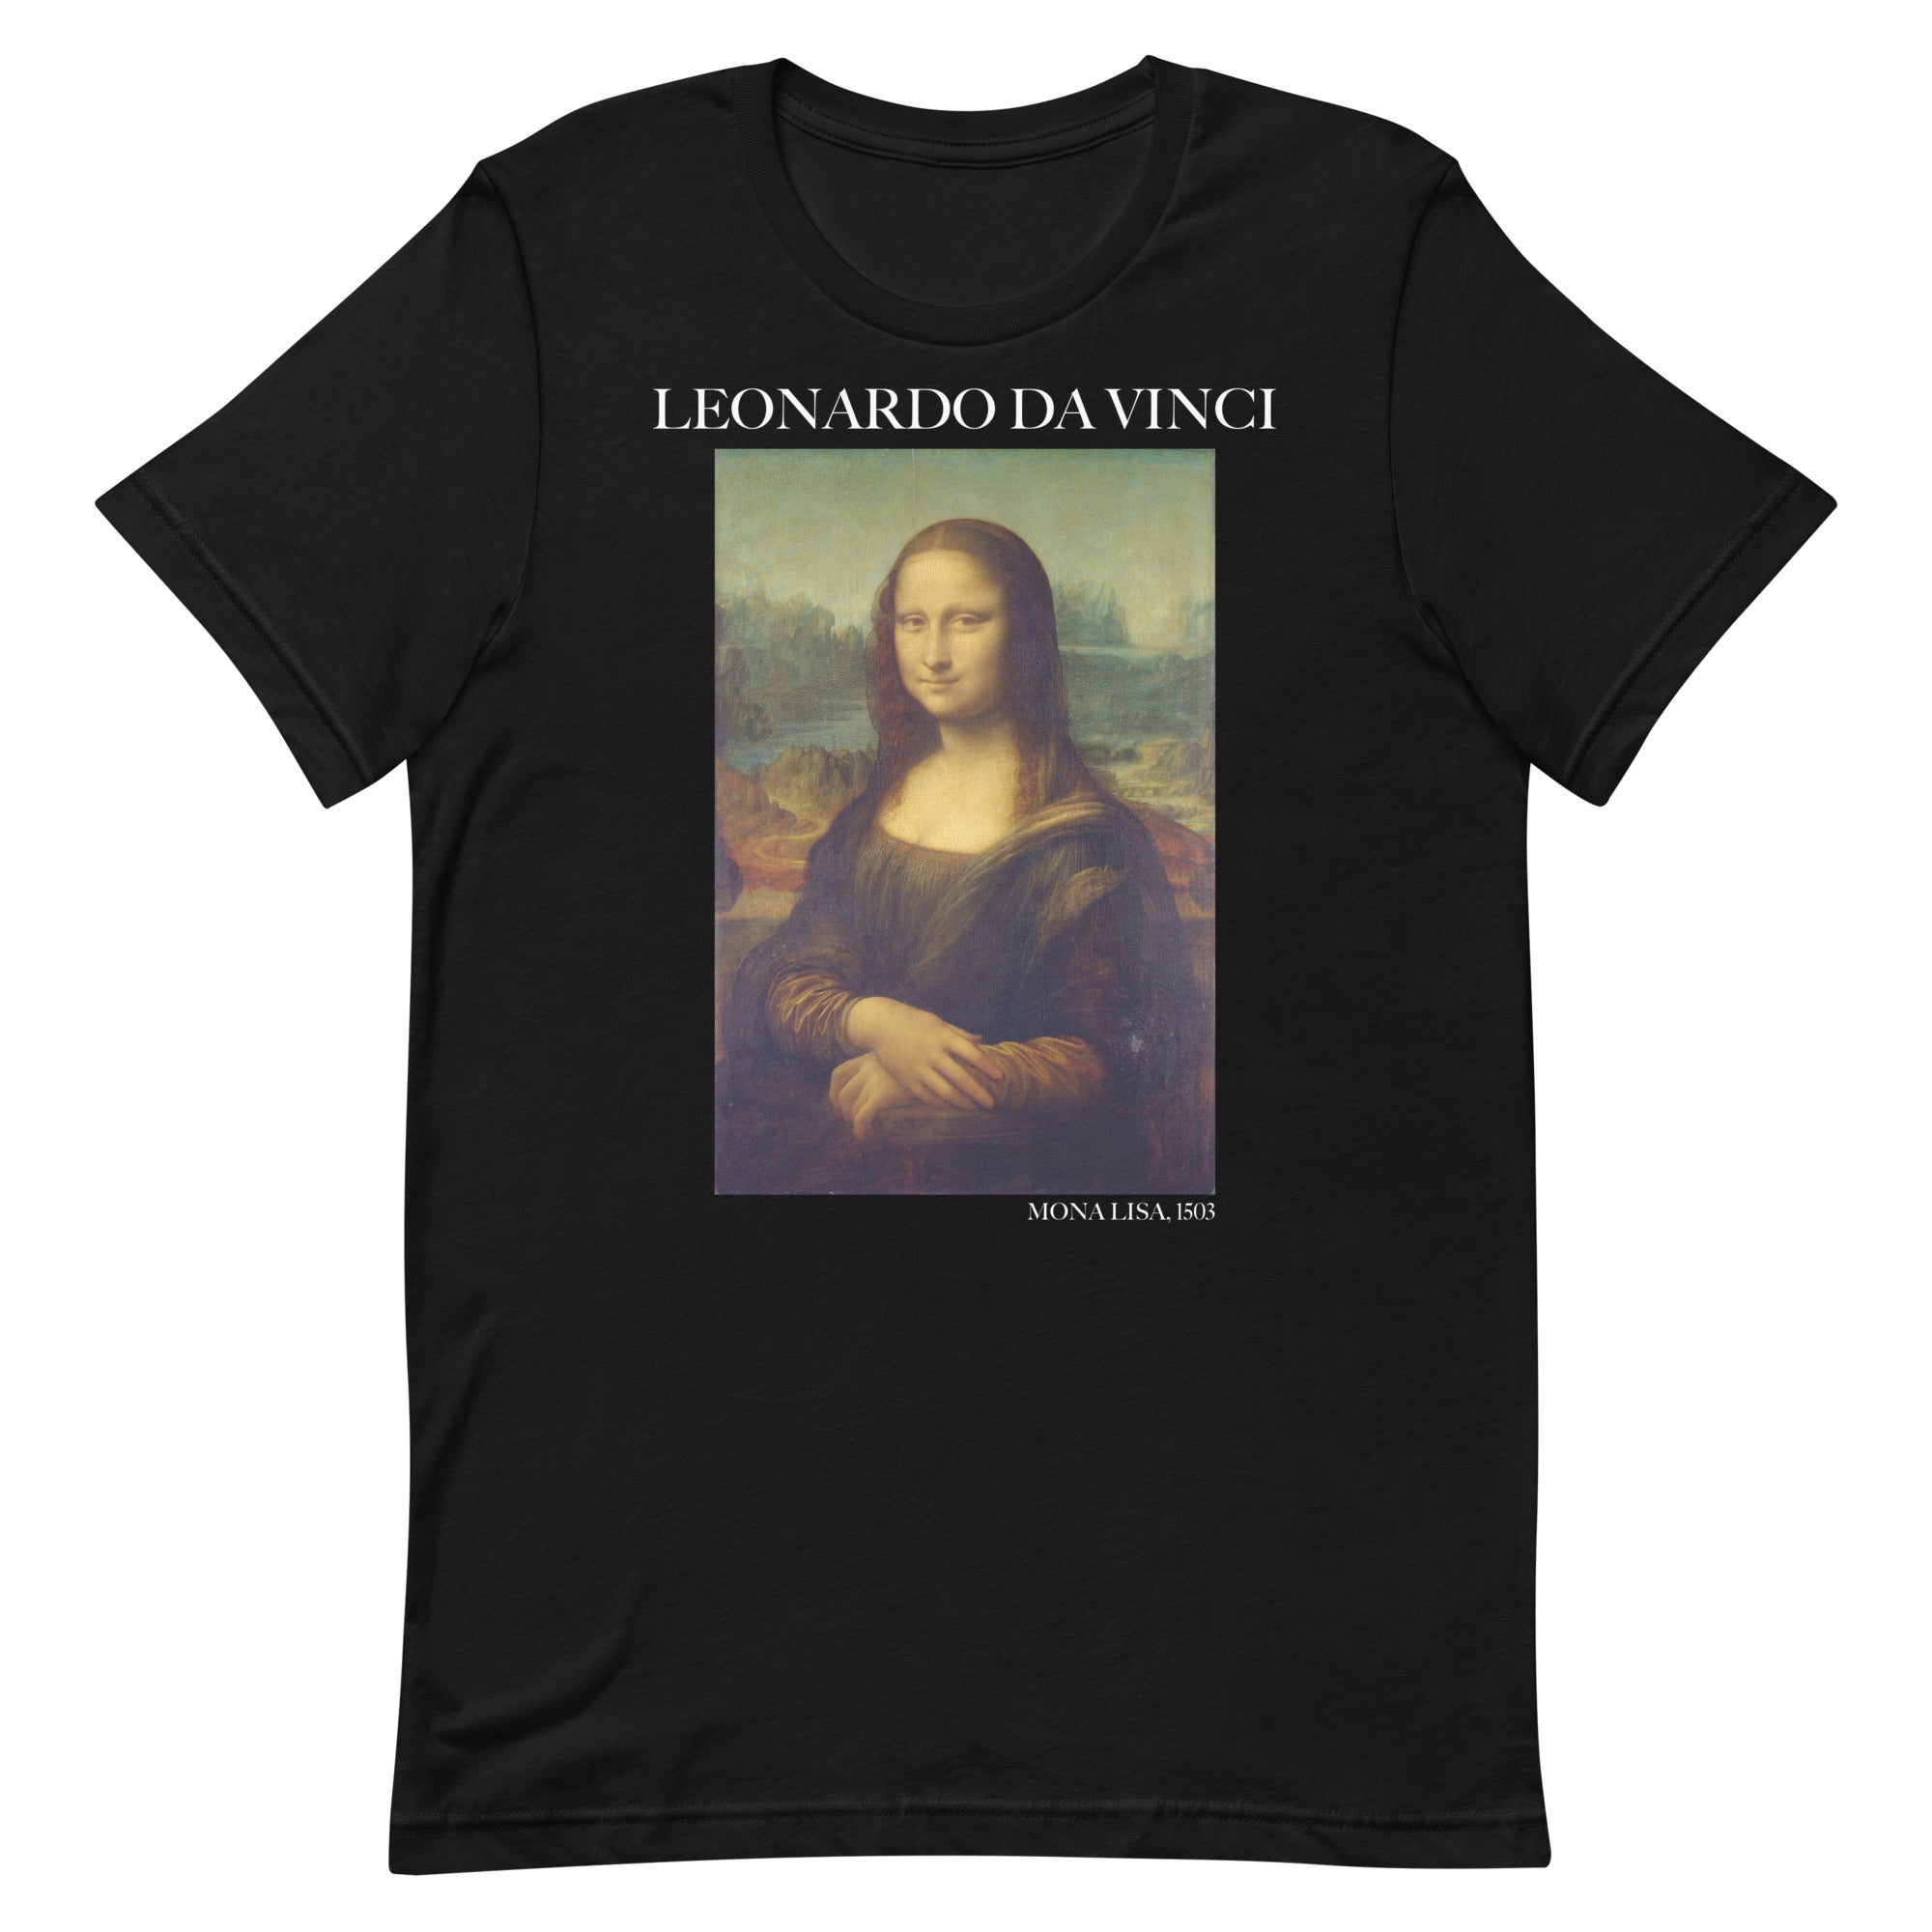 Leonardo da Vinci 'Mona Lisa' Famous Painting T-Shirt | Unisex Classic Art Tee